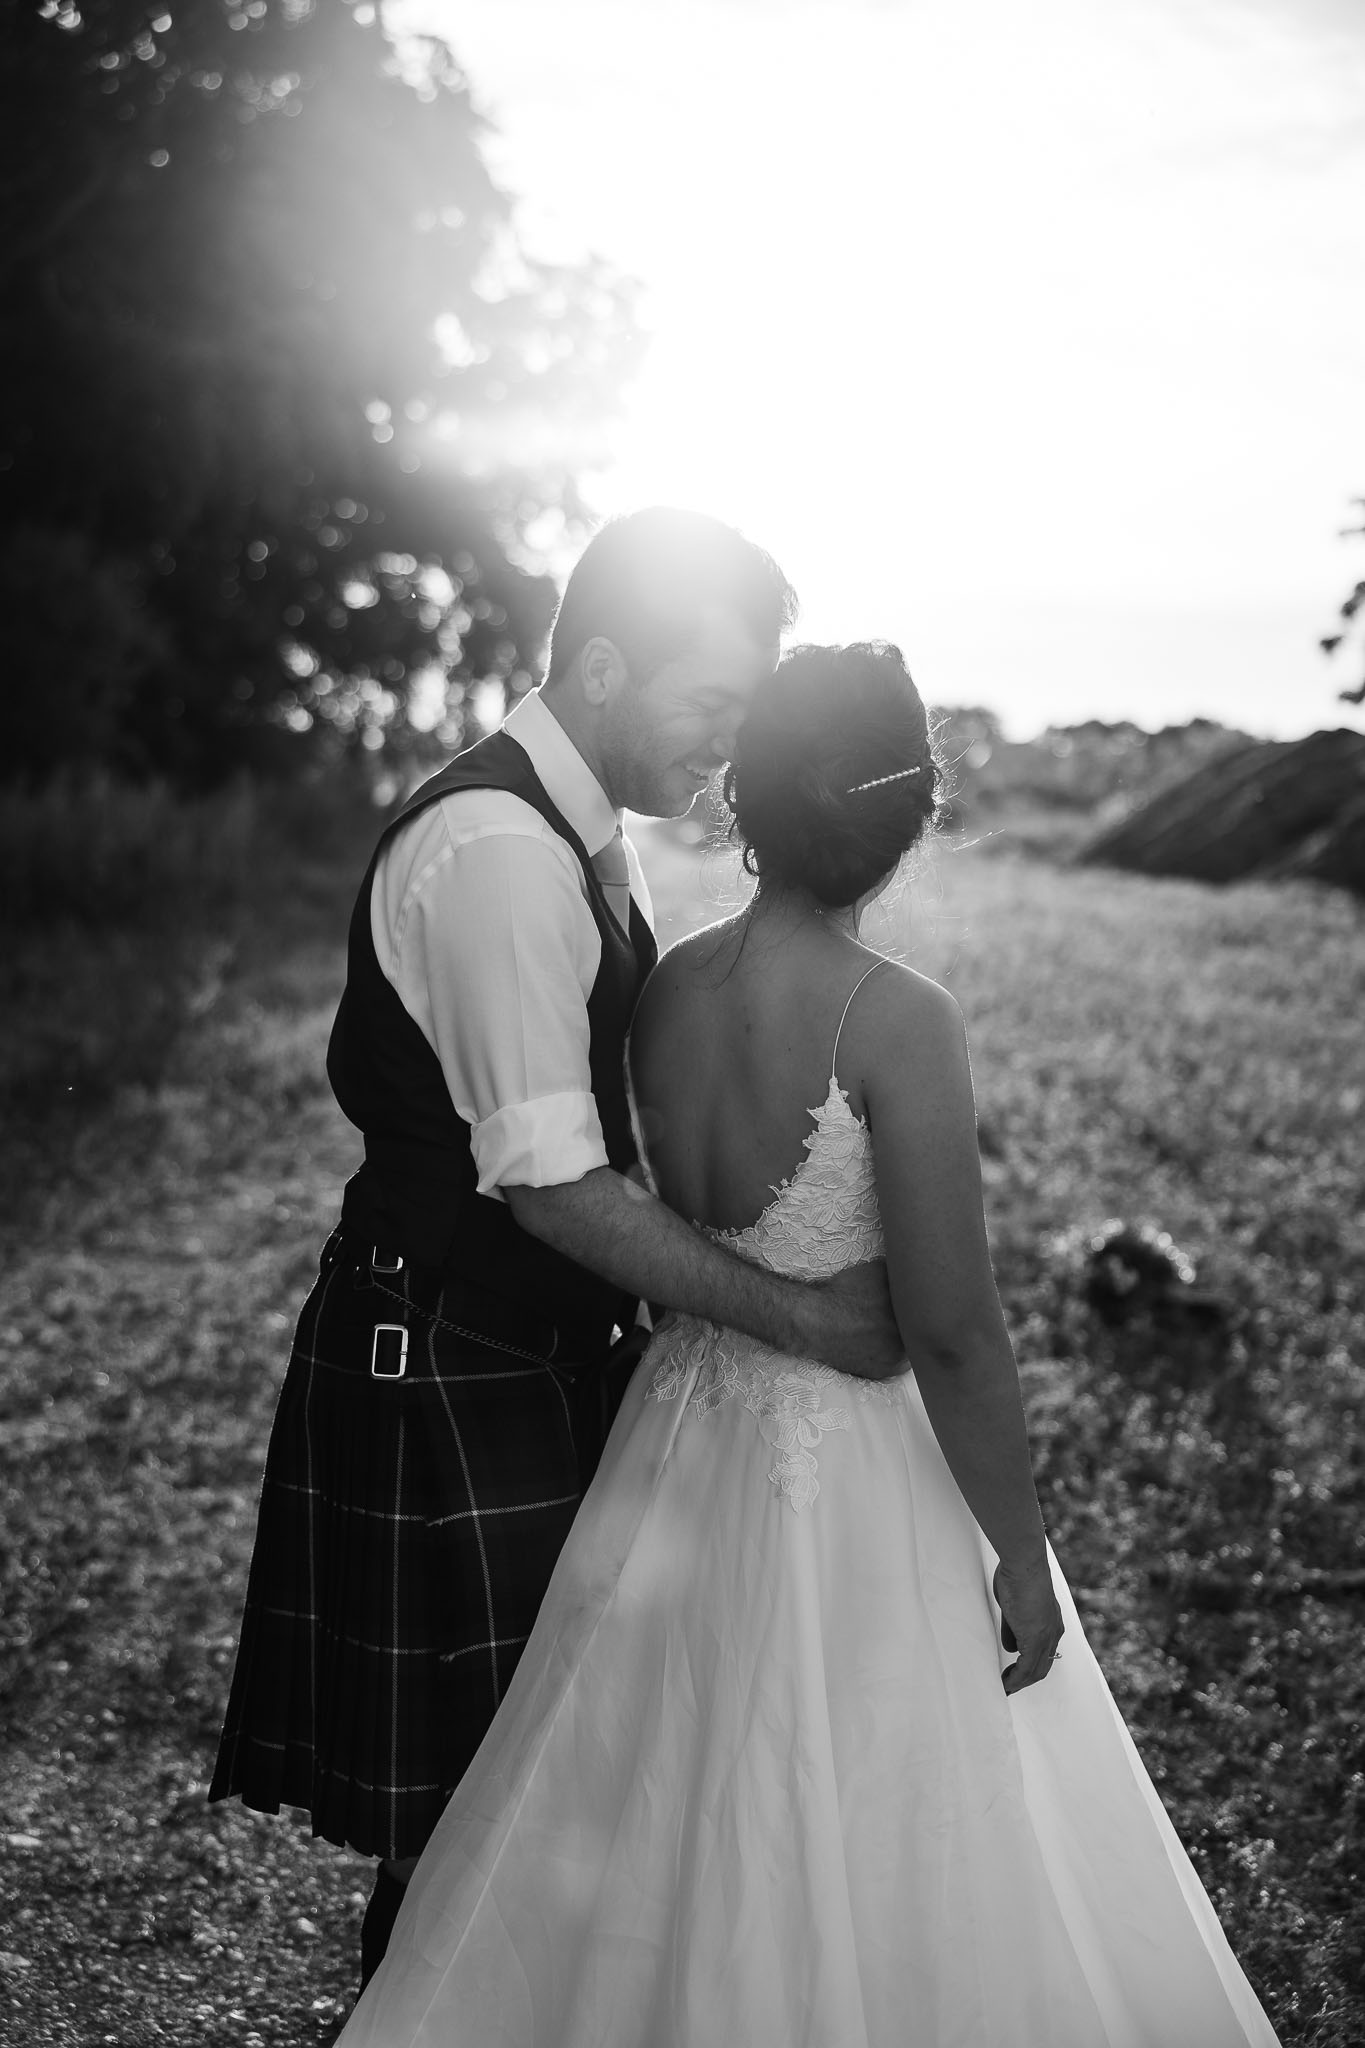 Amazing wedding photos of a bride and groom